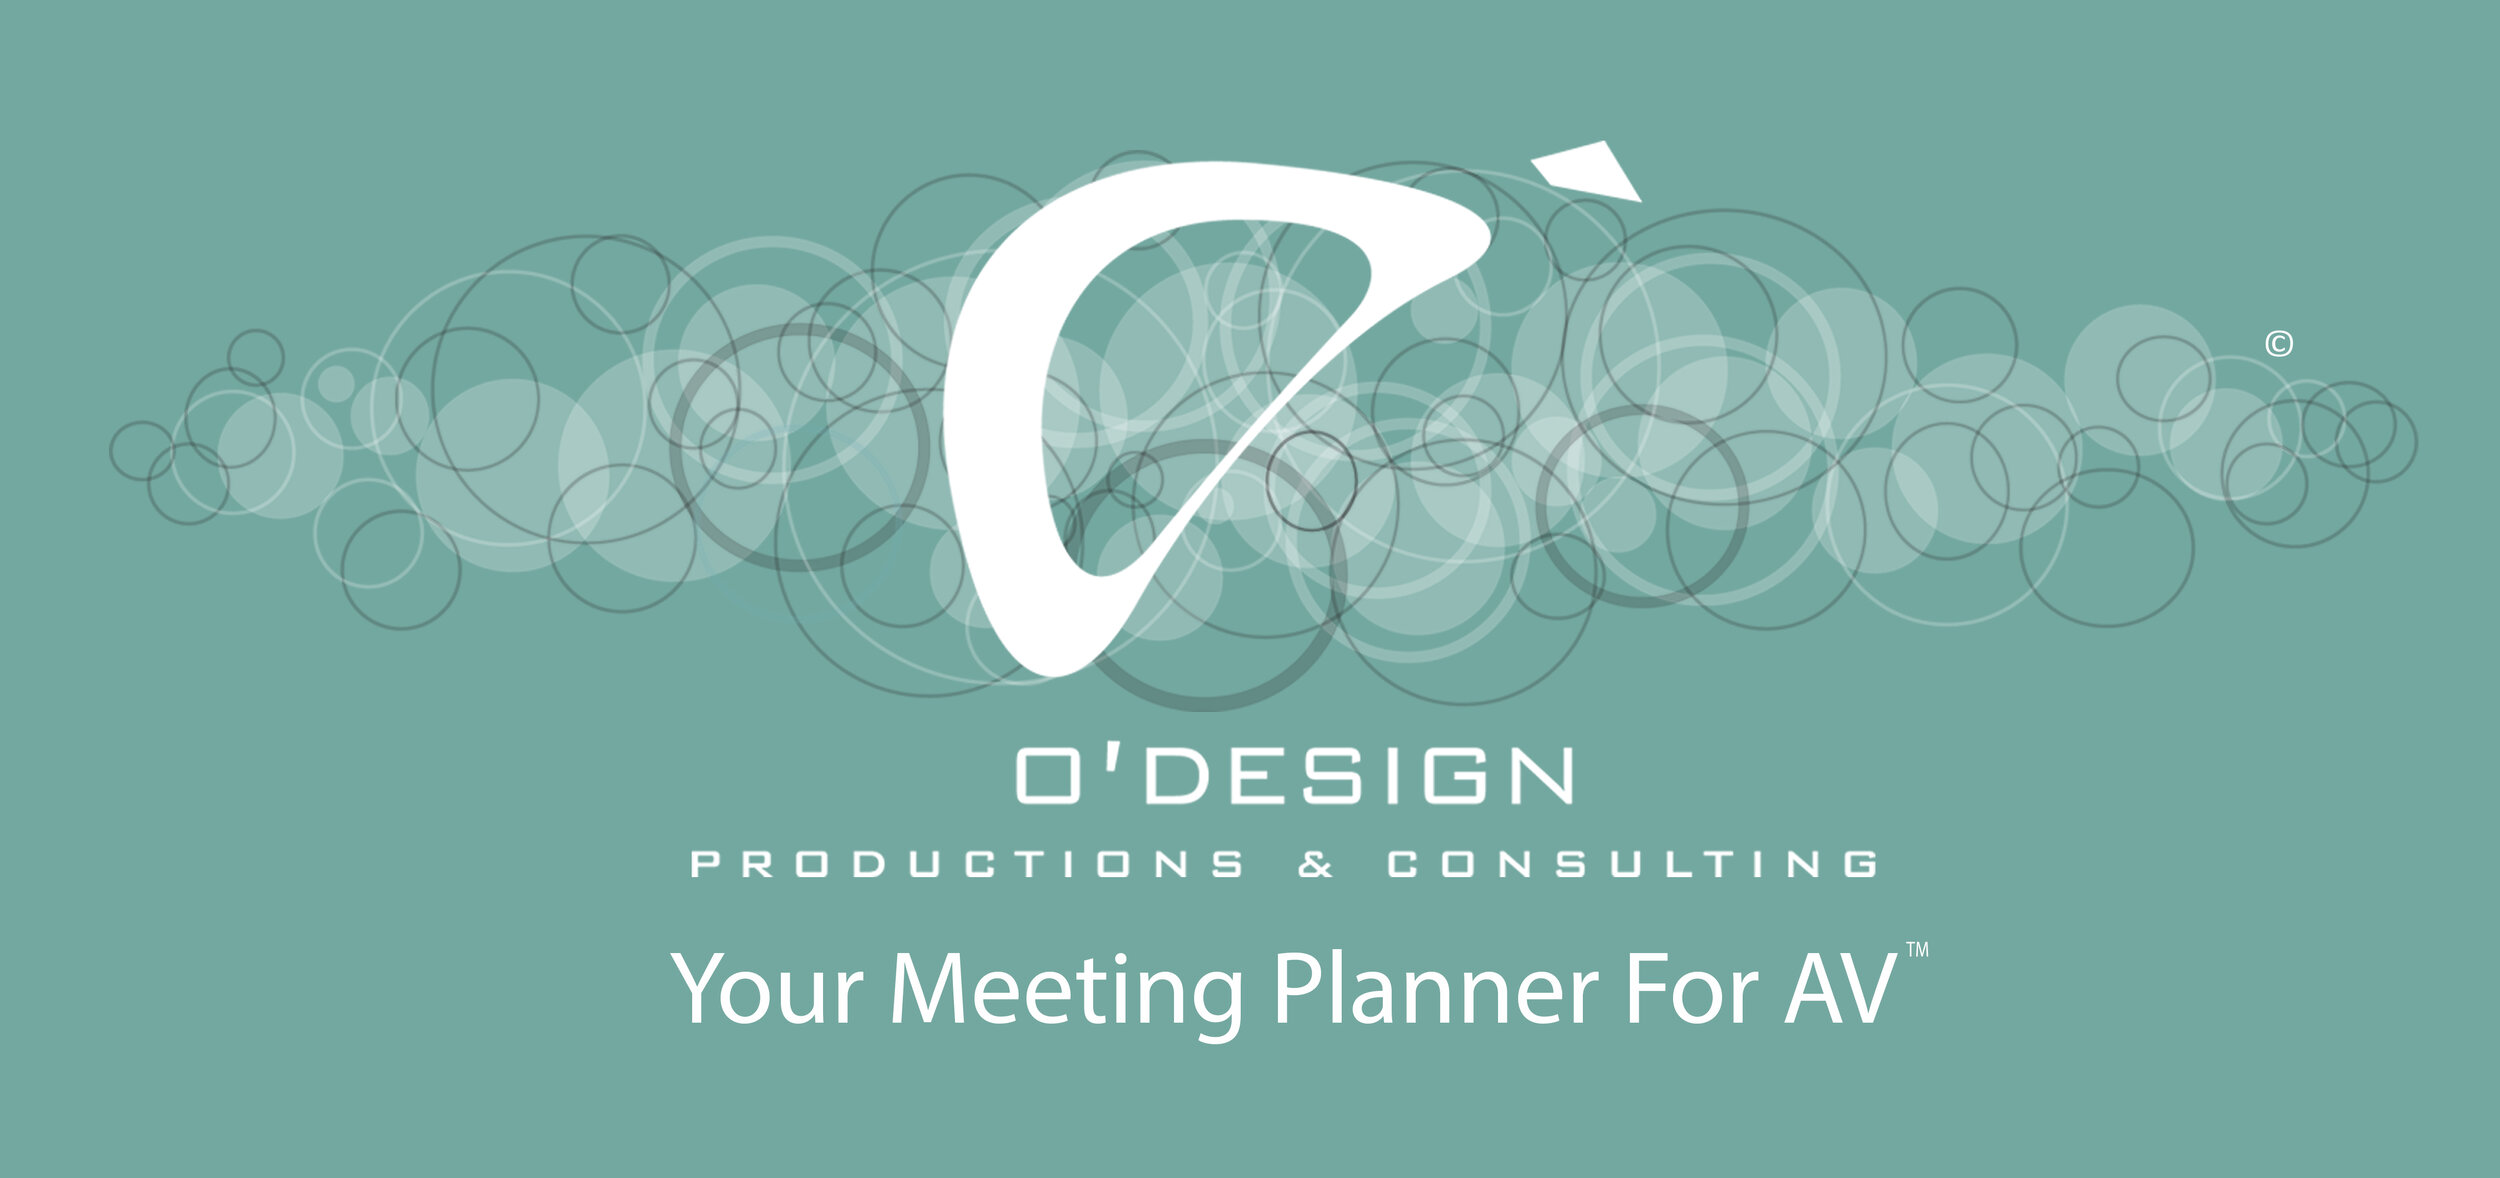 O'Design logo.jpg